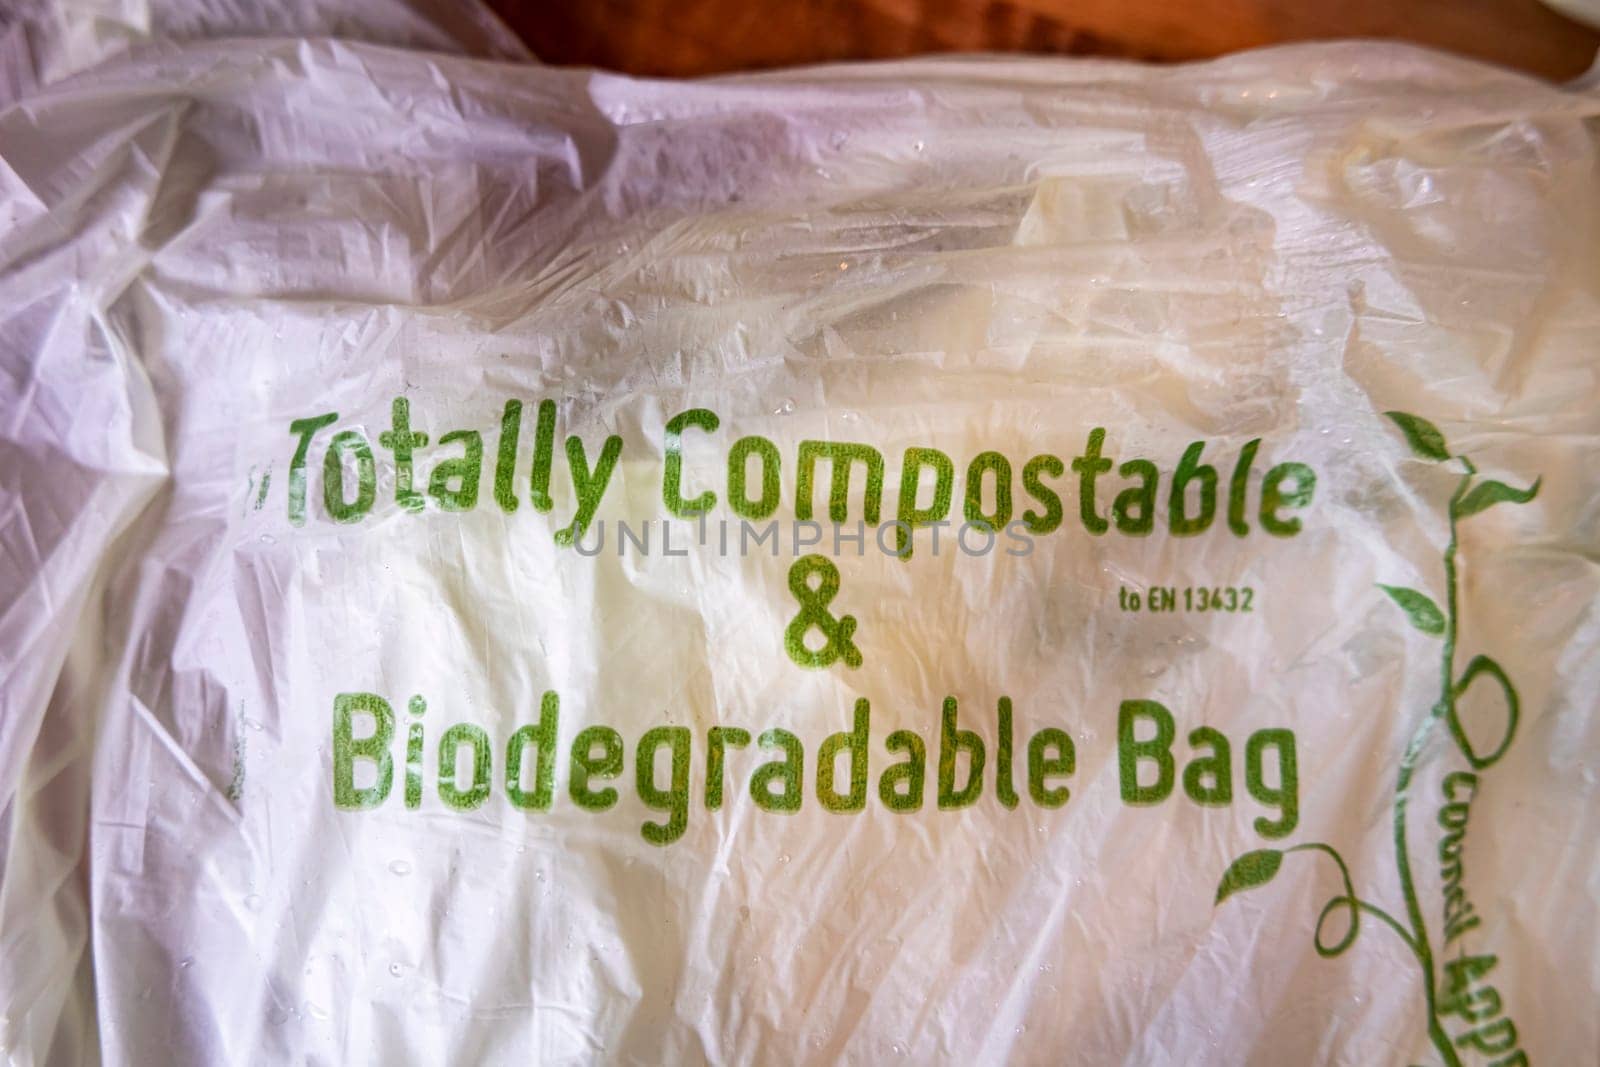 PORTNOO, IRELAND - NOVEMBER 11 2021: This bags are totally compostable.